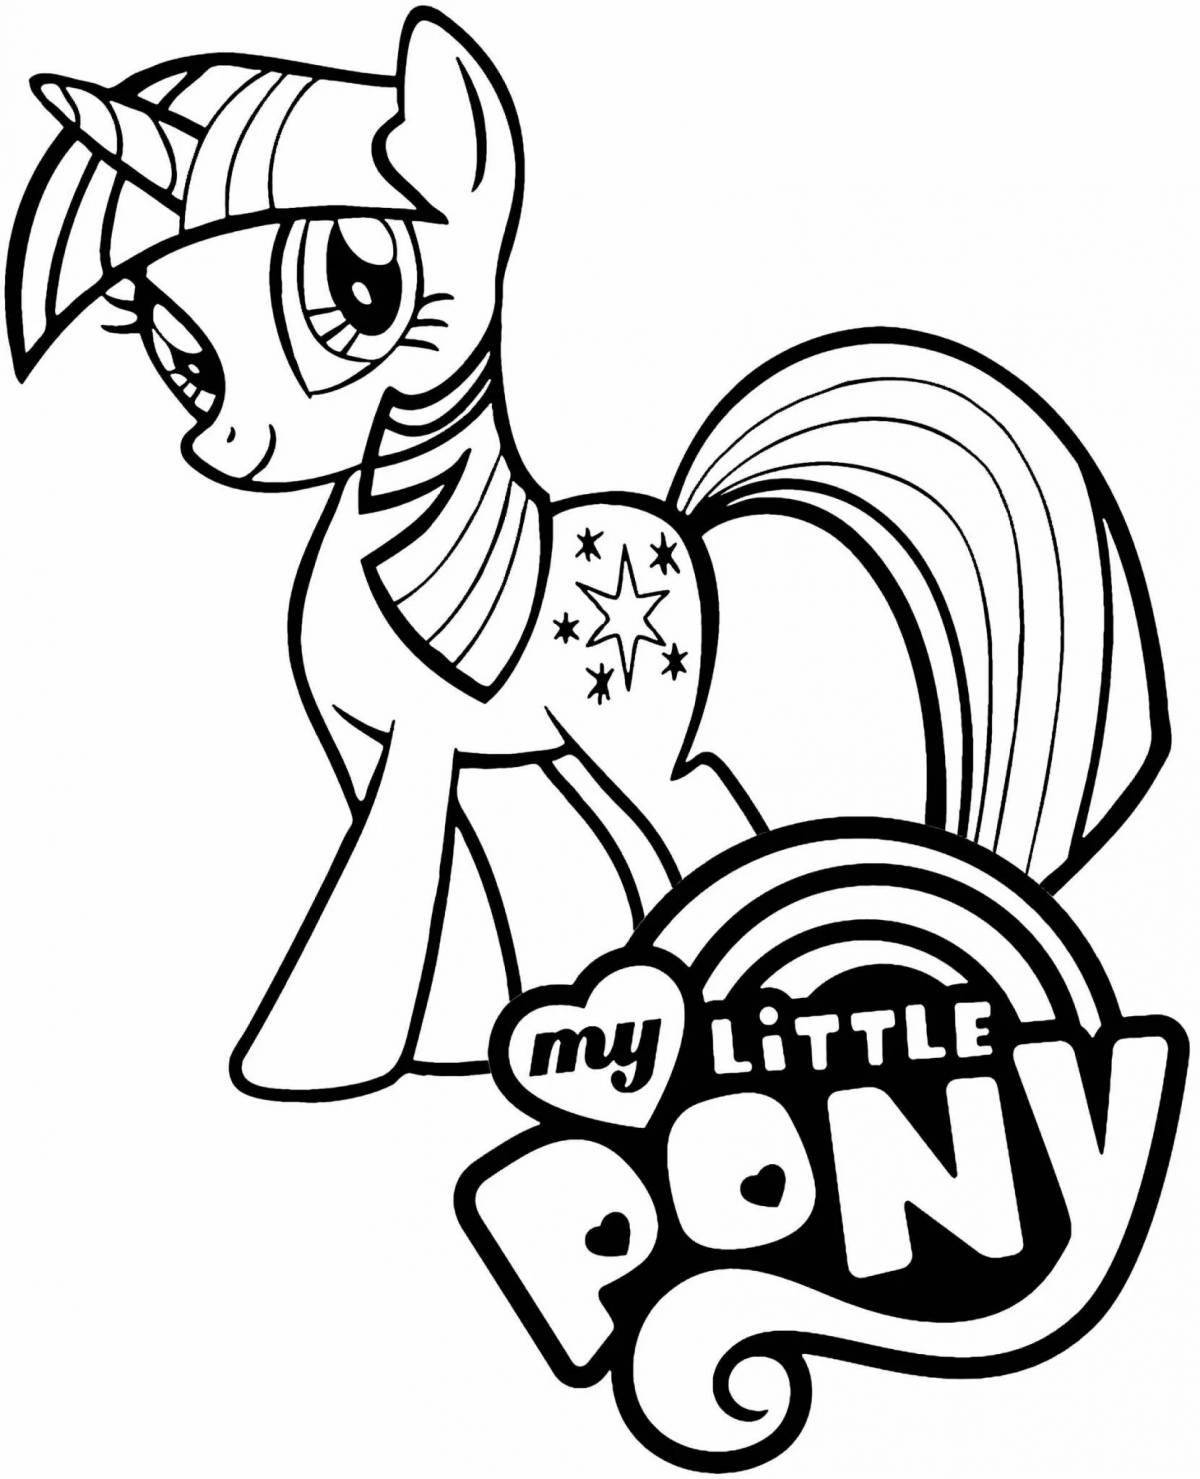 Watershine pony magic coloring page